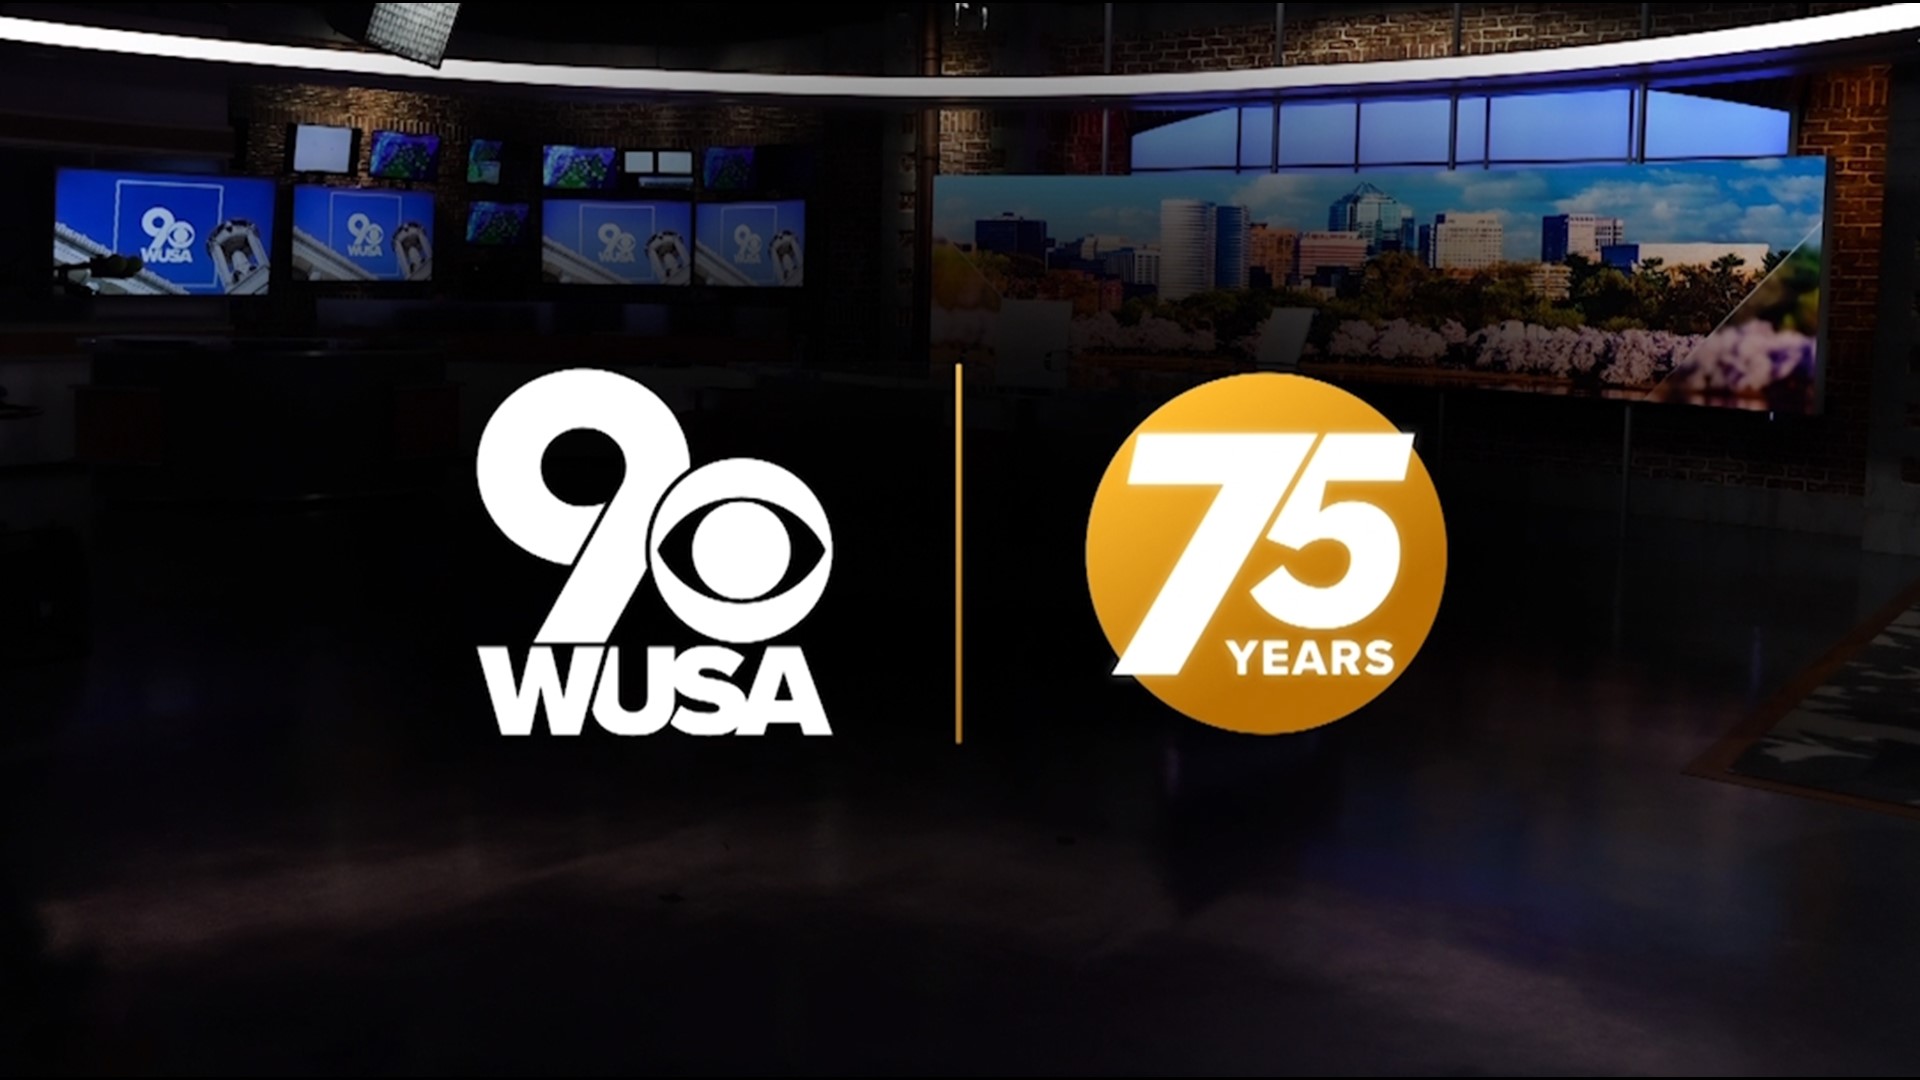 Celebrating 75 years of WUSA9